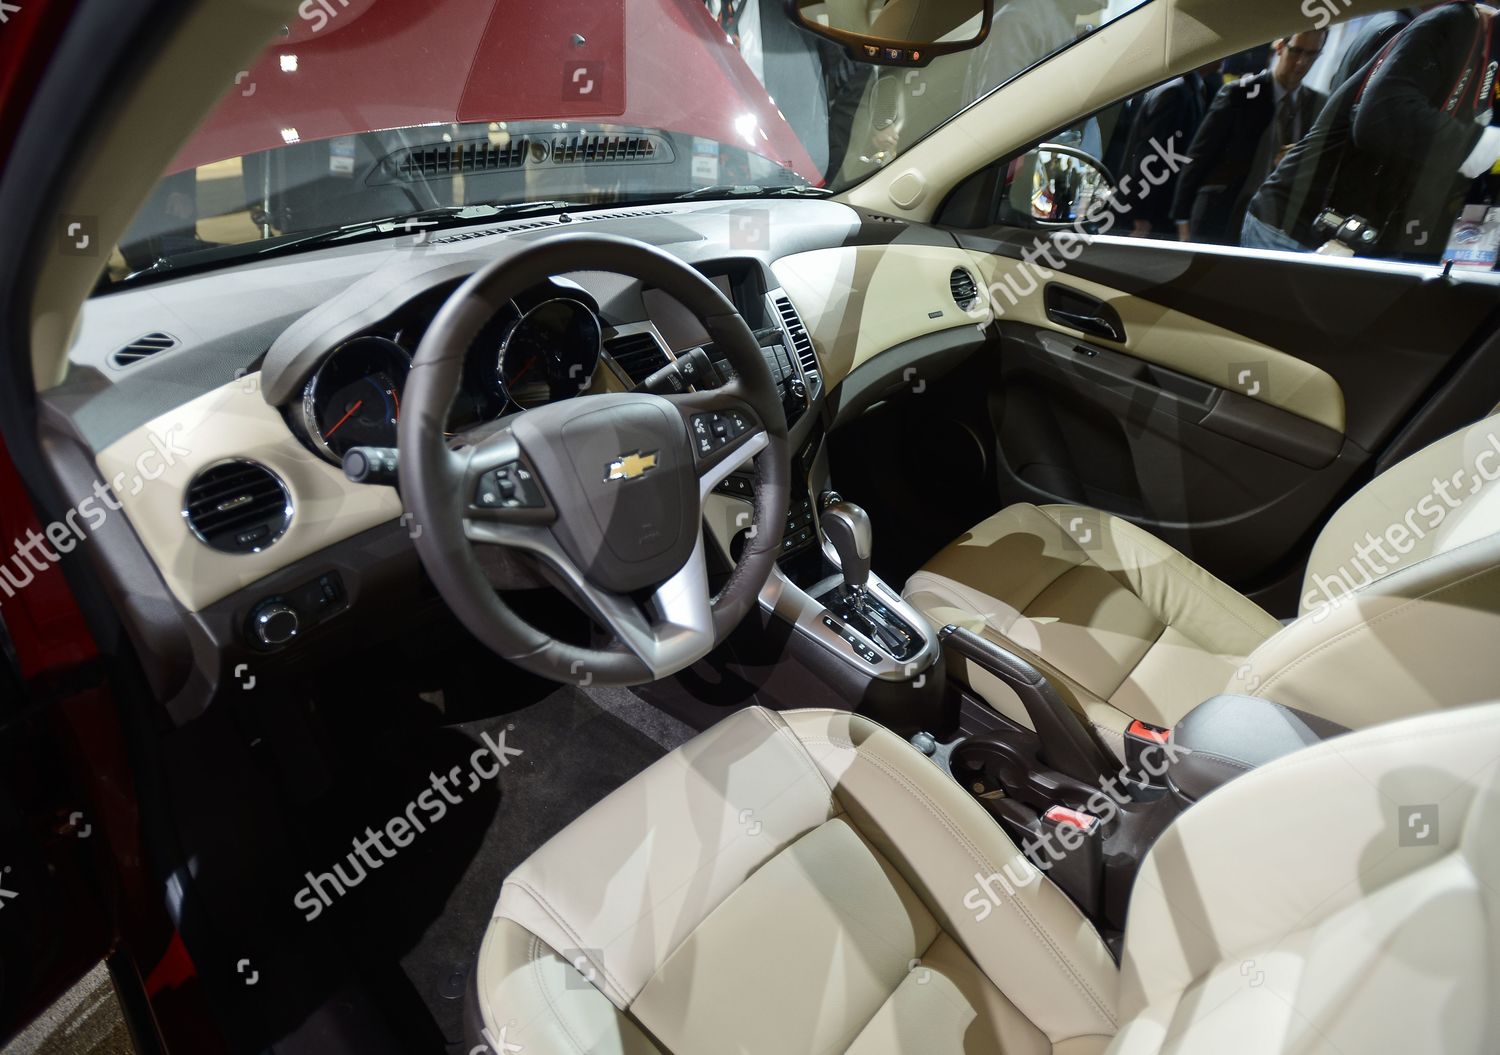 Interior 2014 Chevrolet Cruze Turbo Diesel Seen Editorial